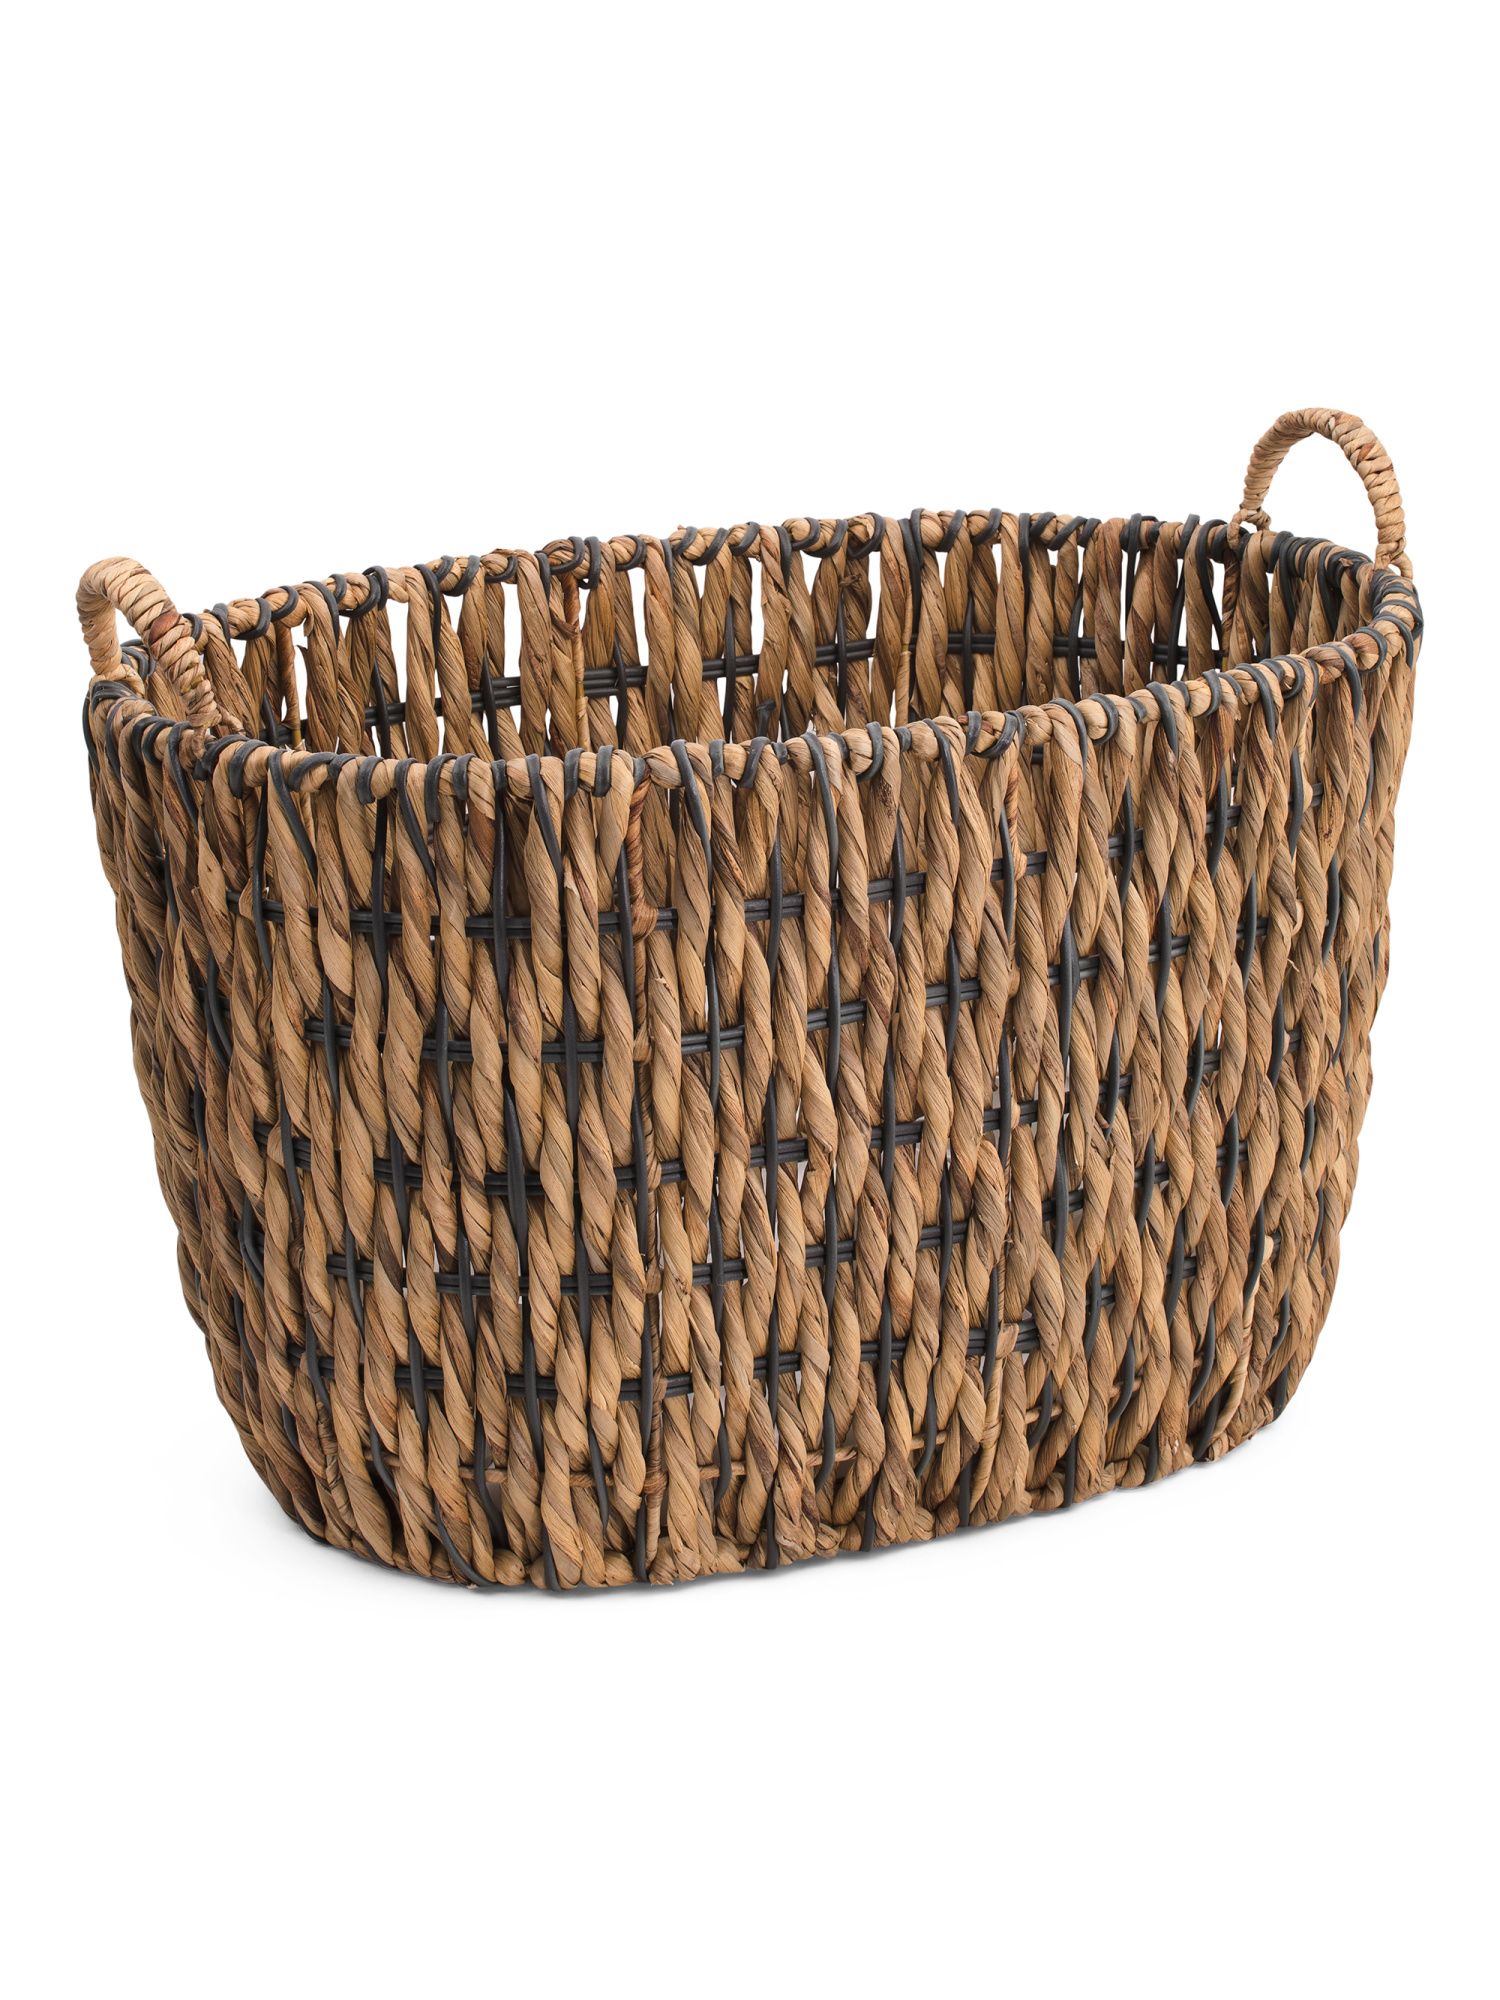 Large Oval Twist Basket With Handles | TJ Maxx